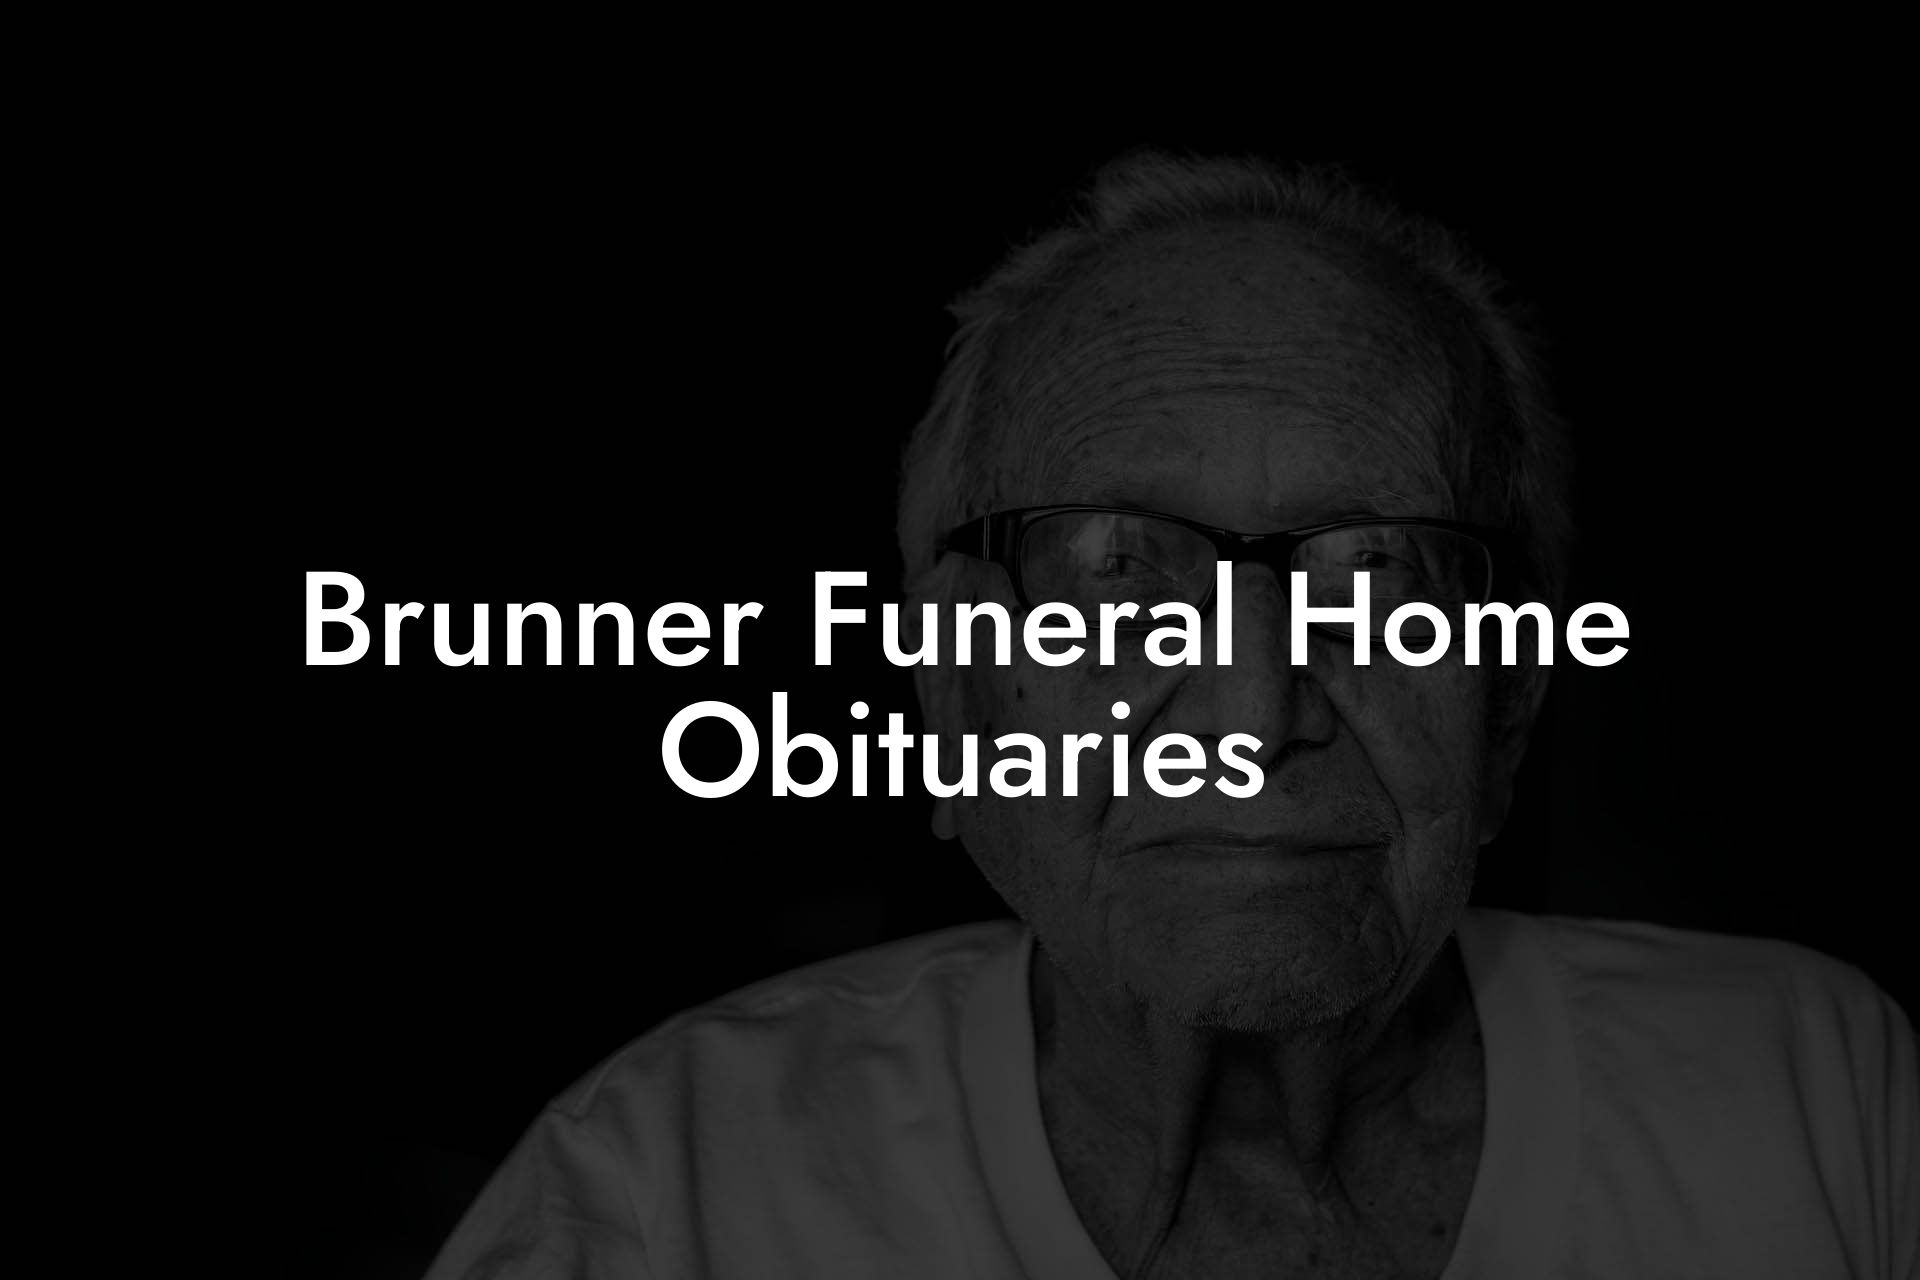 Brunner Funeral Home Obituaries